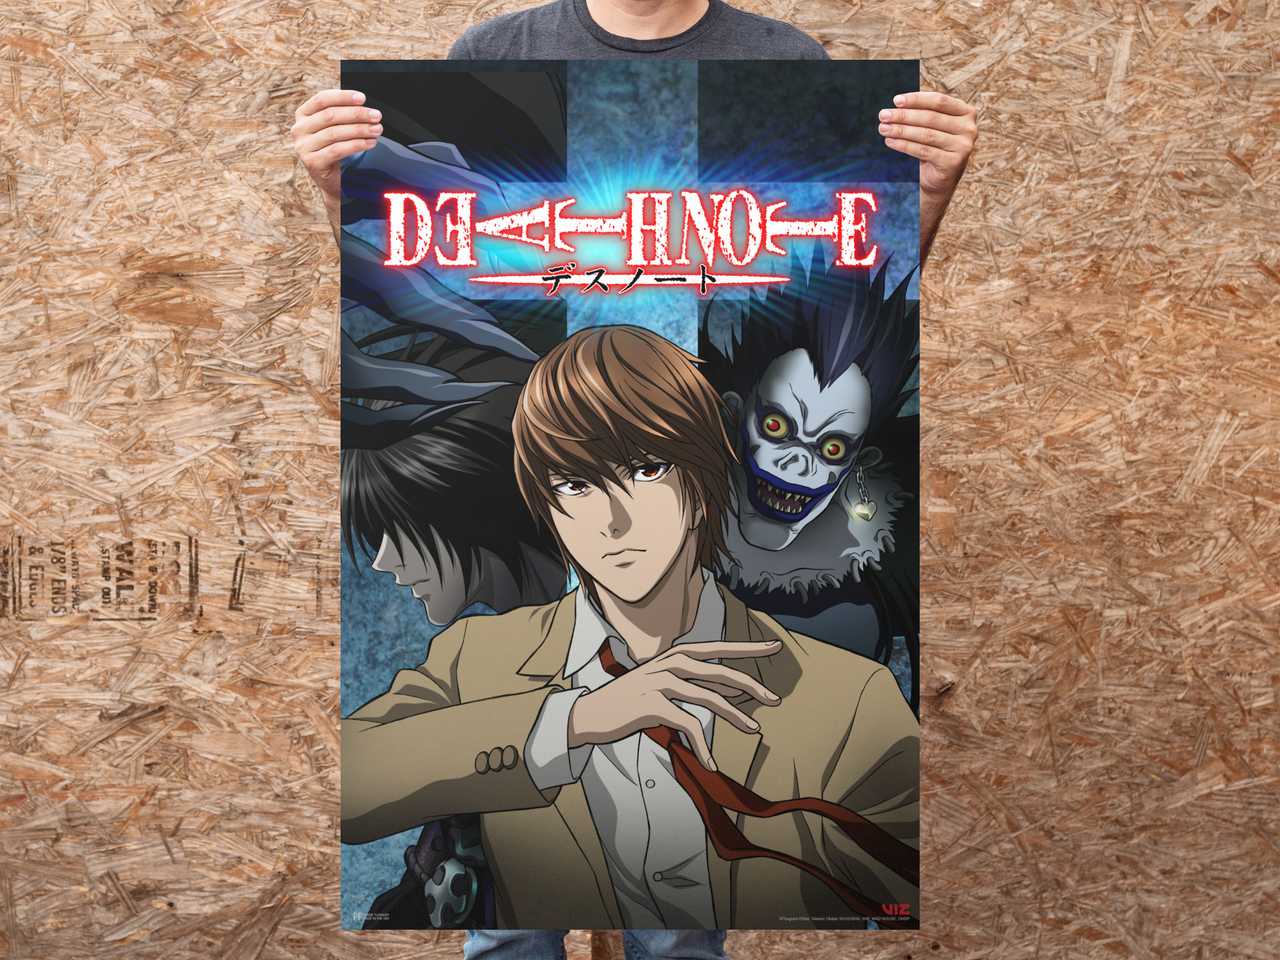 Death Note Anime Posters Modern Anime Merch Wall Decor Manga Series Cool  Teens Boys Bedroom Dorm Room Artwork Decorations Japanese Anime Stuff